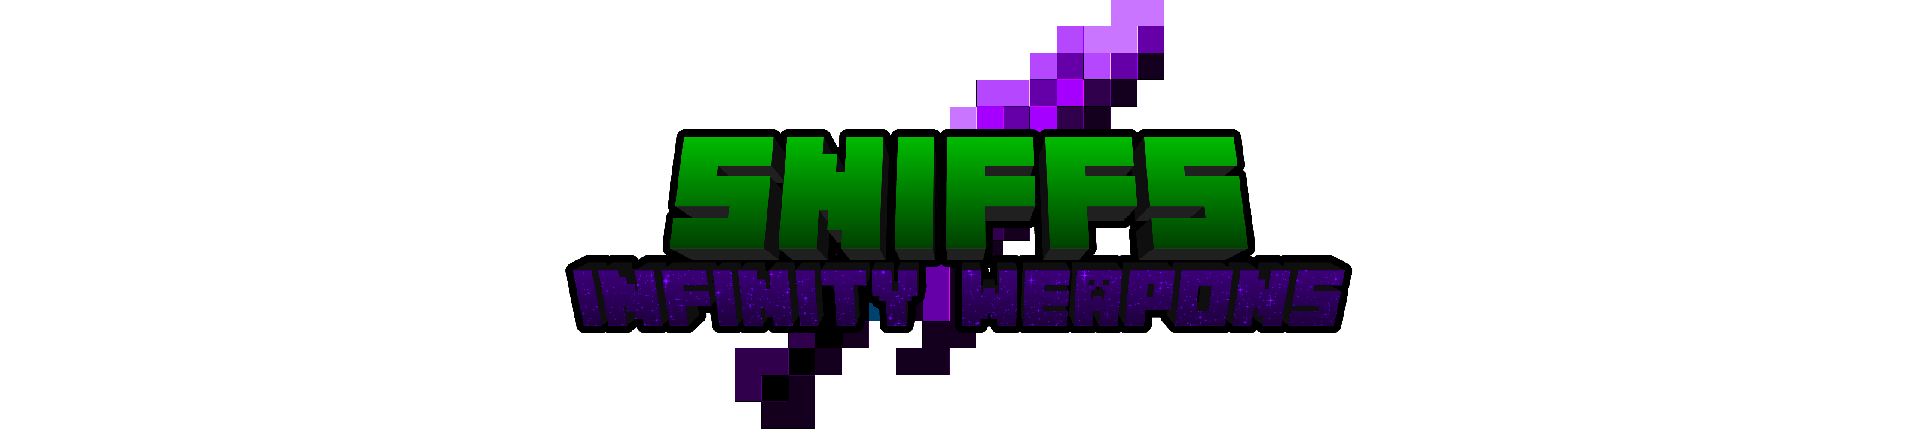 Infinity matter dominator sword mod - Minecraft Mods - CurseForge